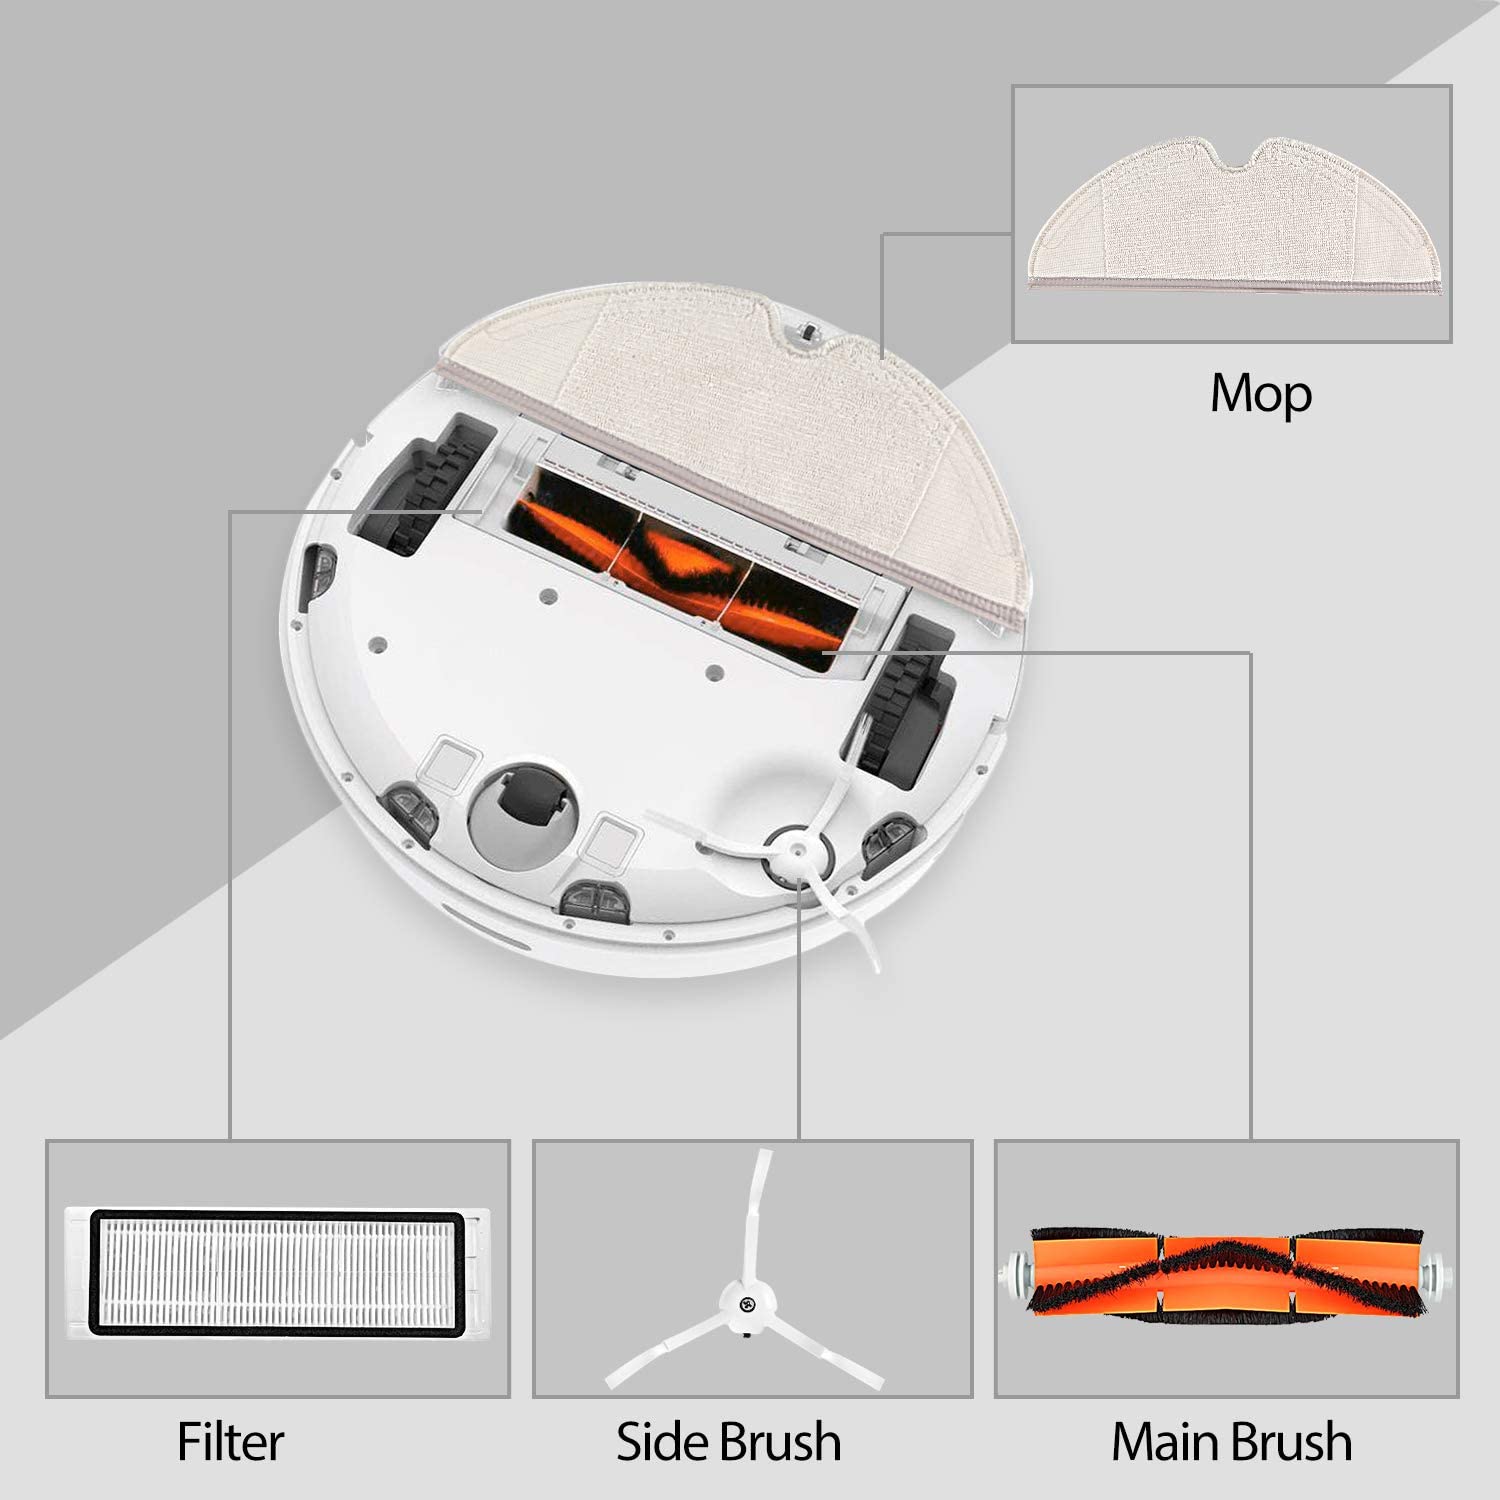 Filter s50 Main Brush Sweeper Sweeping robot accessories xiaomi roborock parts 